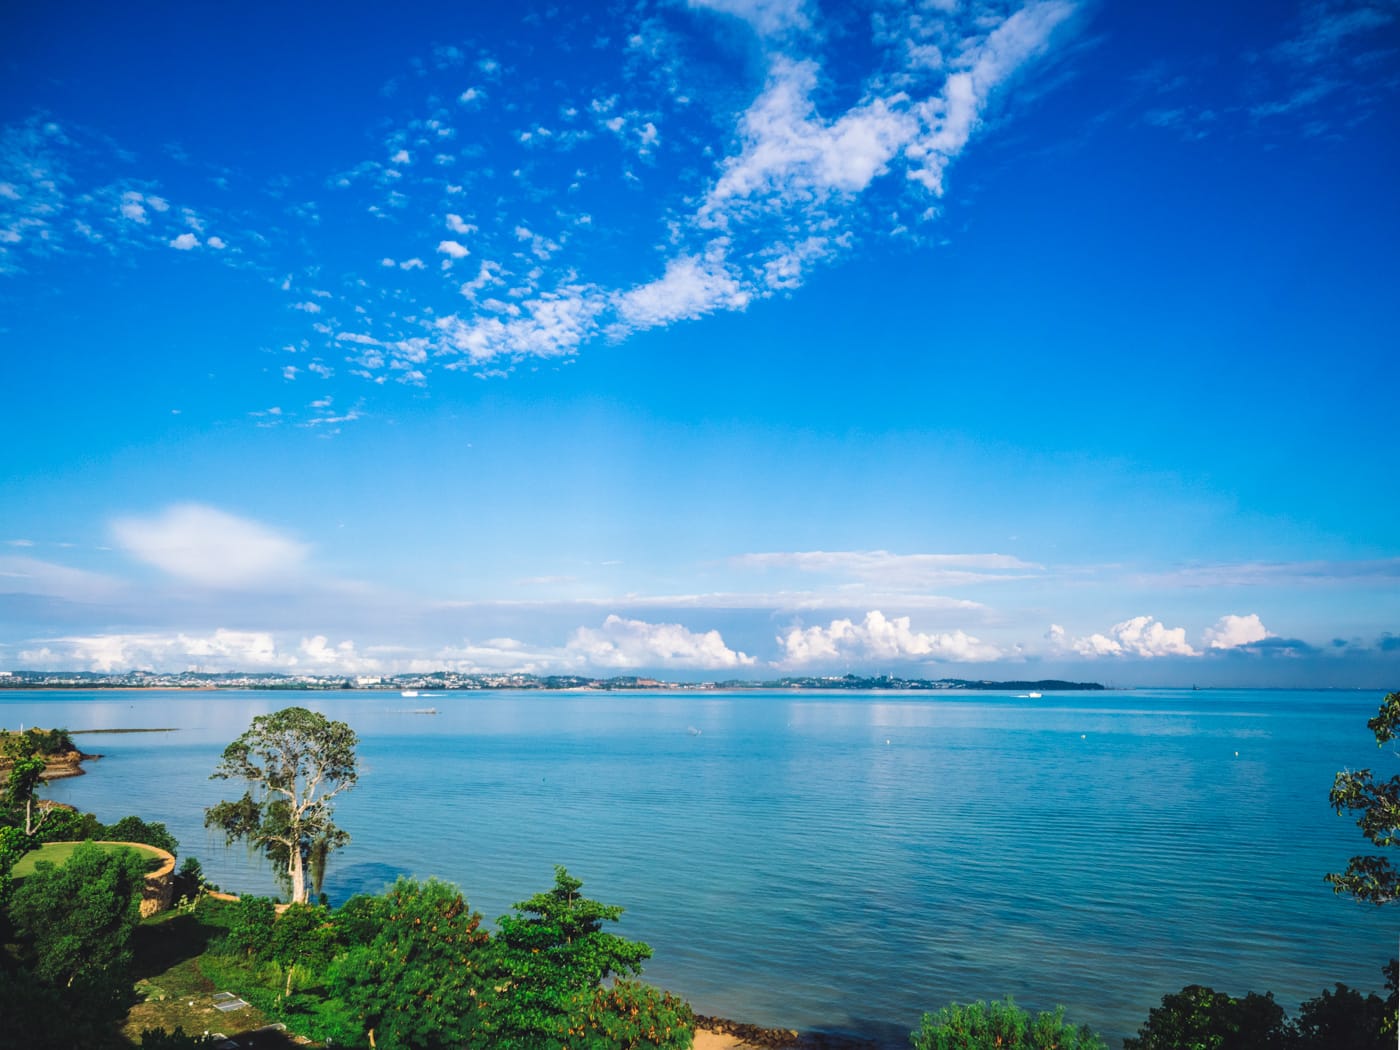 Indonesia - Montigo - Blue skies & water